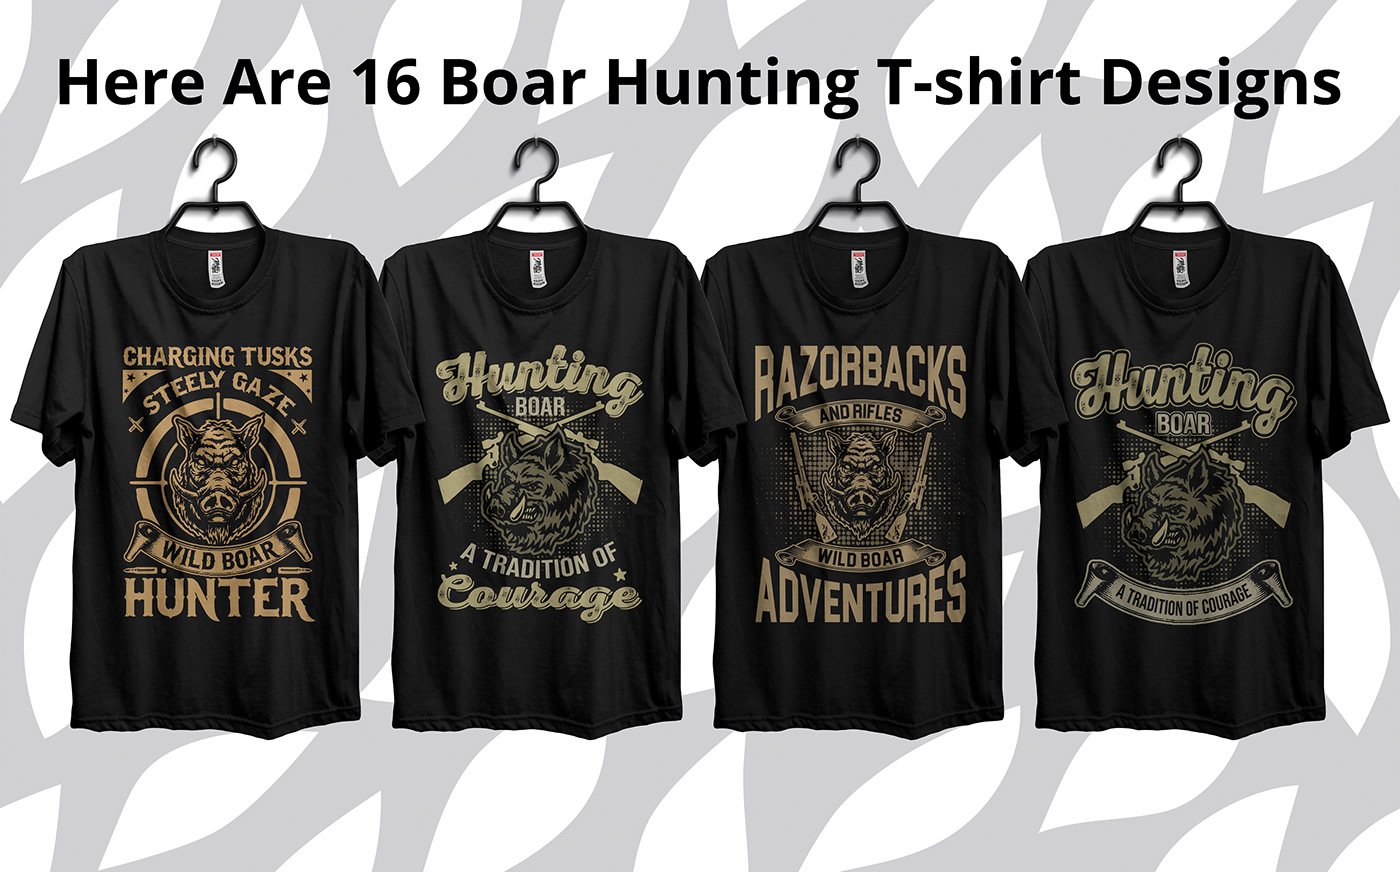 Hunting T-shirt Design Hunting T-shirt hunting t-shirts boar hunting design Boar hunting T-shirt Boar hunting T-shirts Pig Hunting t-shirt Pig hunting t-shirts